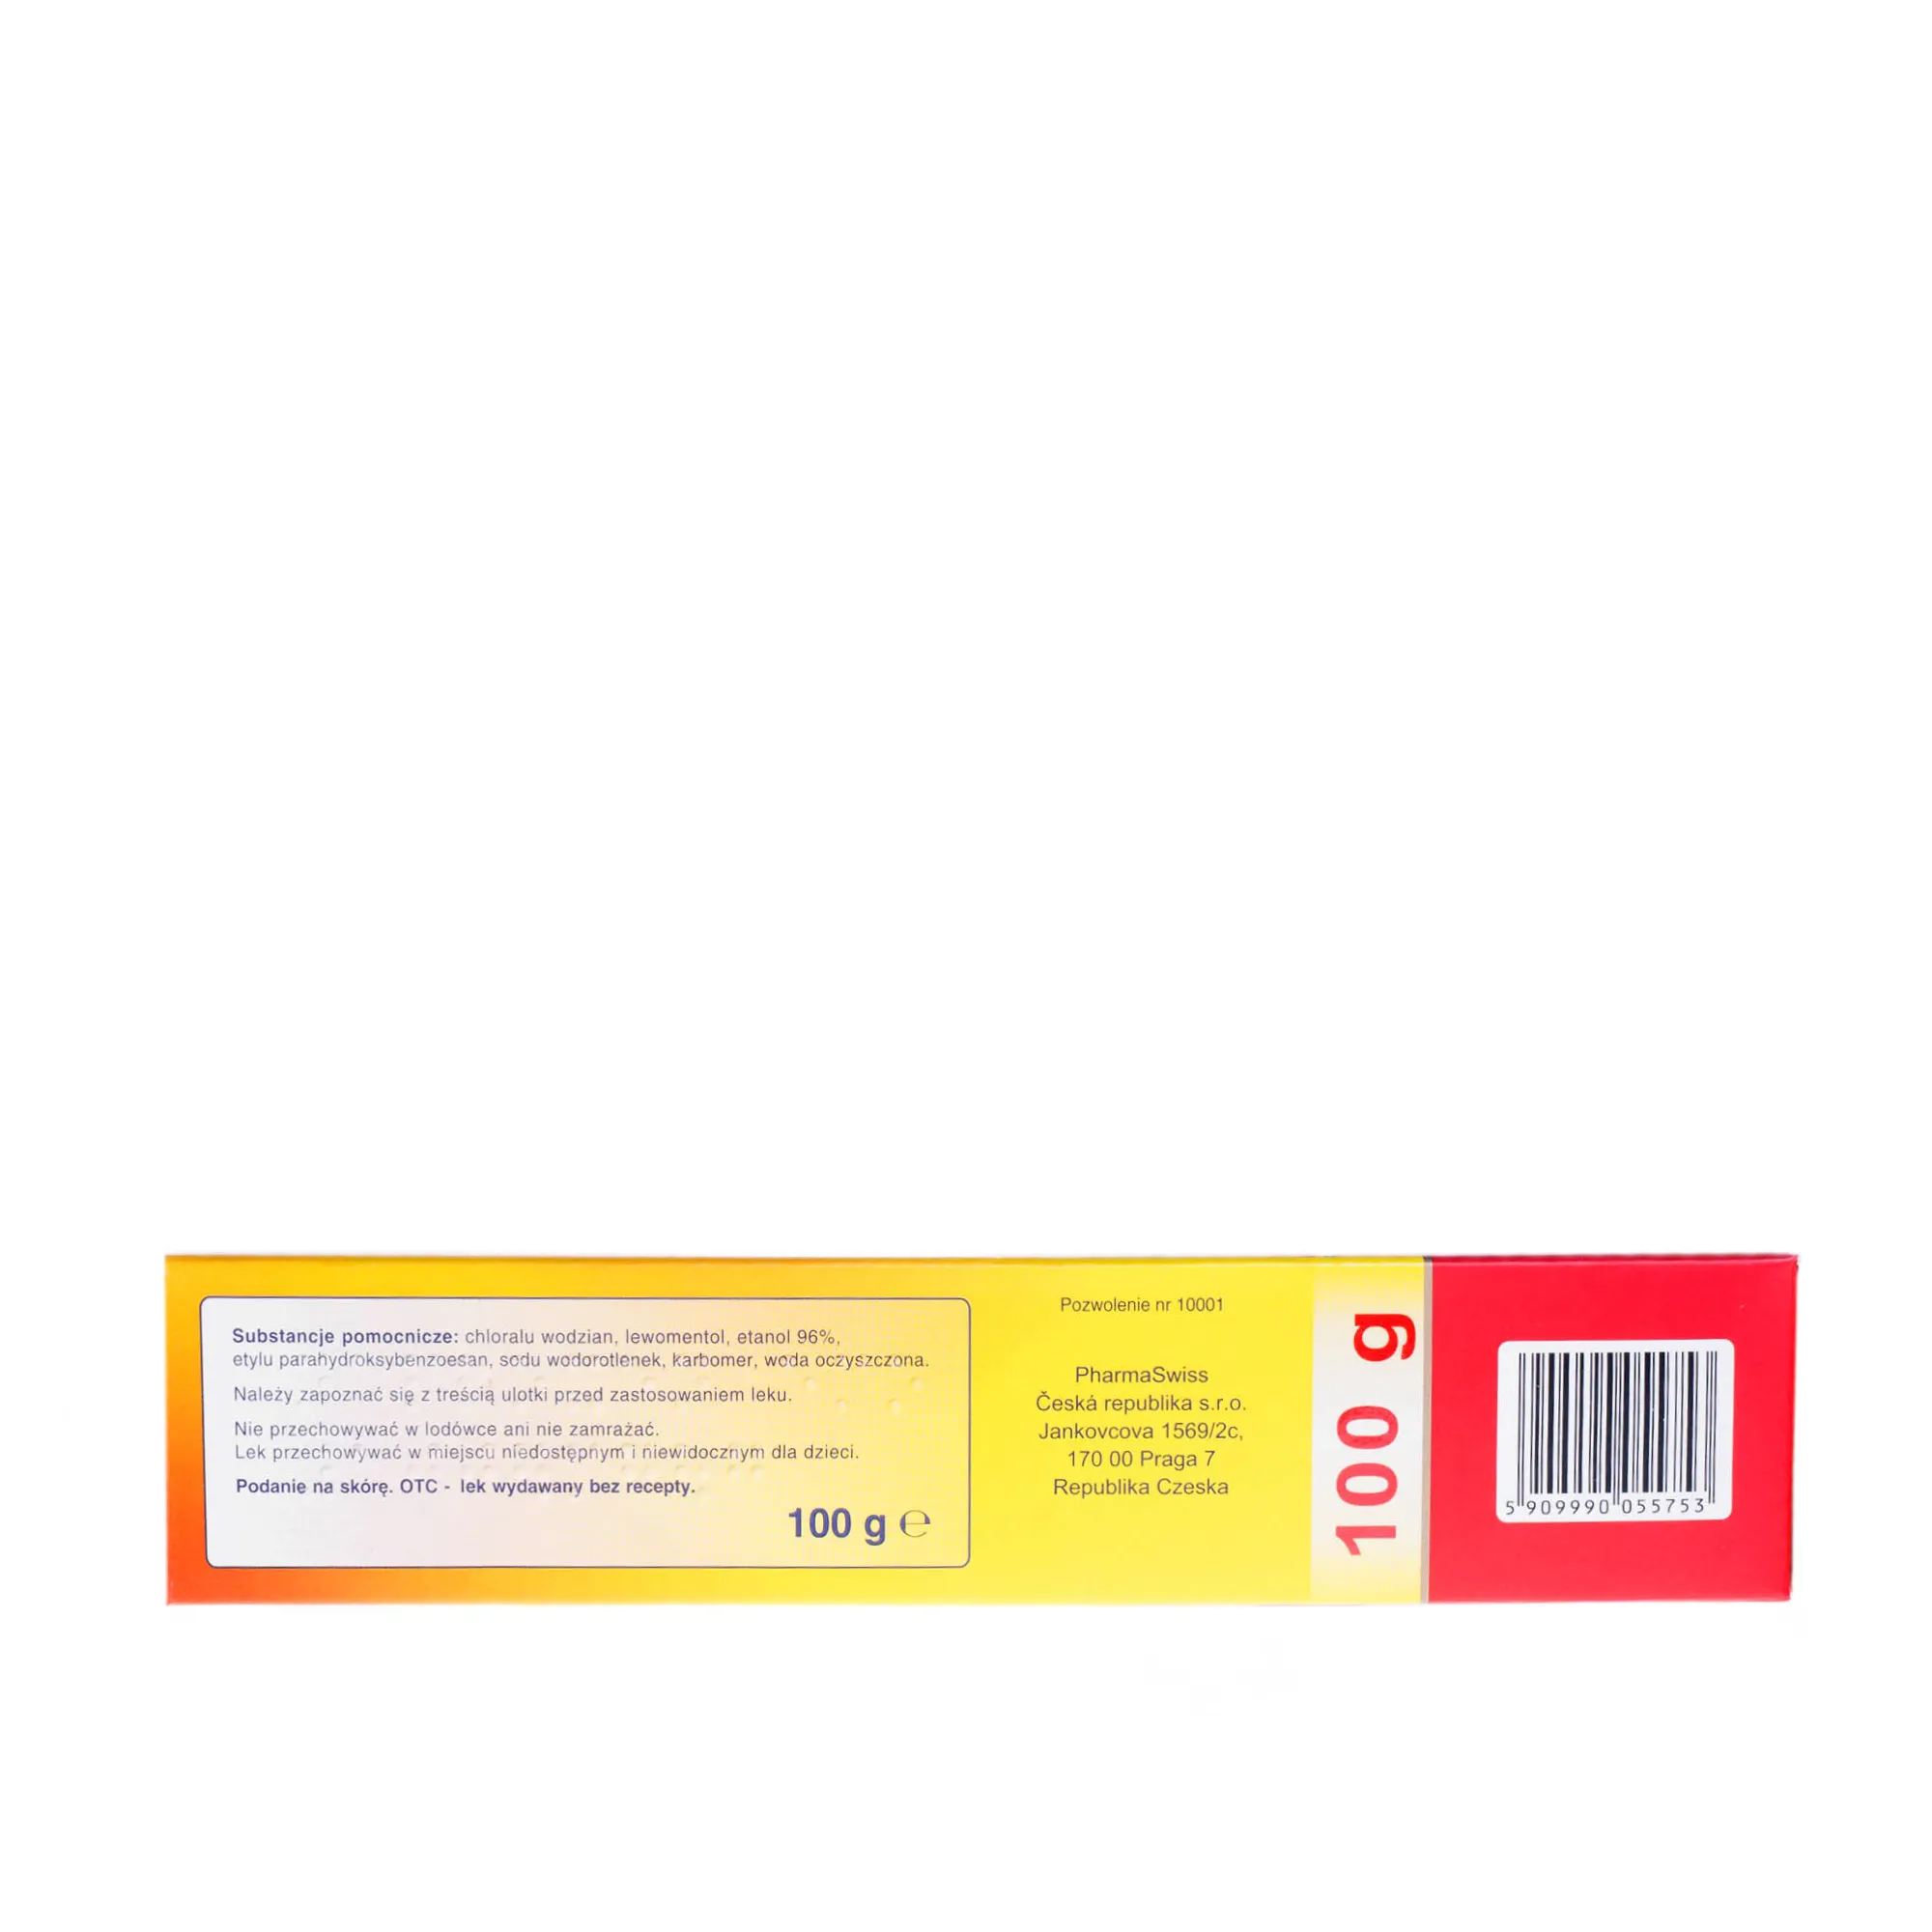 Naproxen Emo 100 mg/g, 100 g 